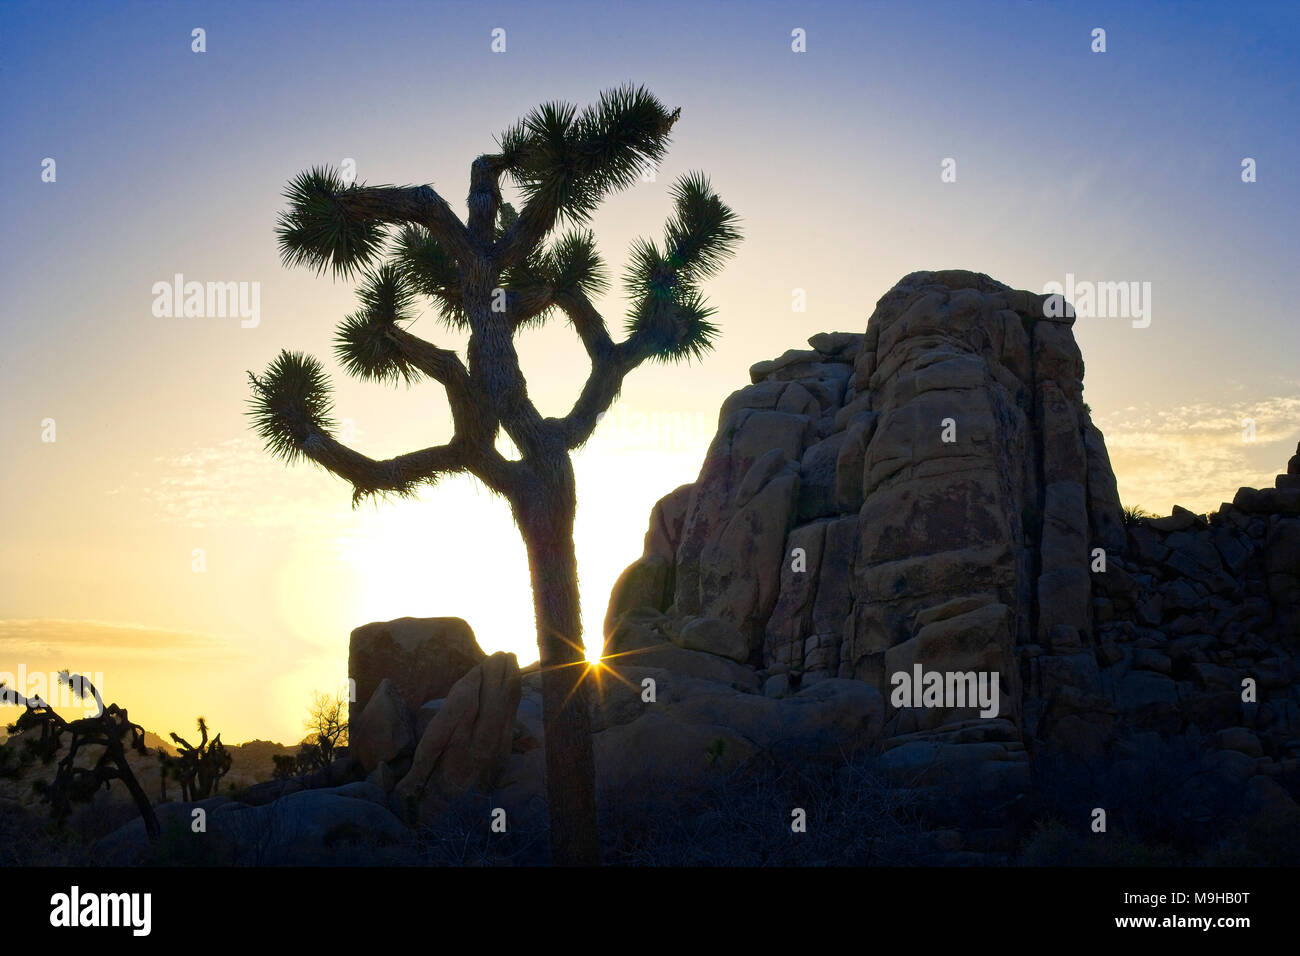 Single Joshua tree at sunset in the desert landscape found in Joshua Tree National Park in Southern California's Mojave Desert Stock Photo